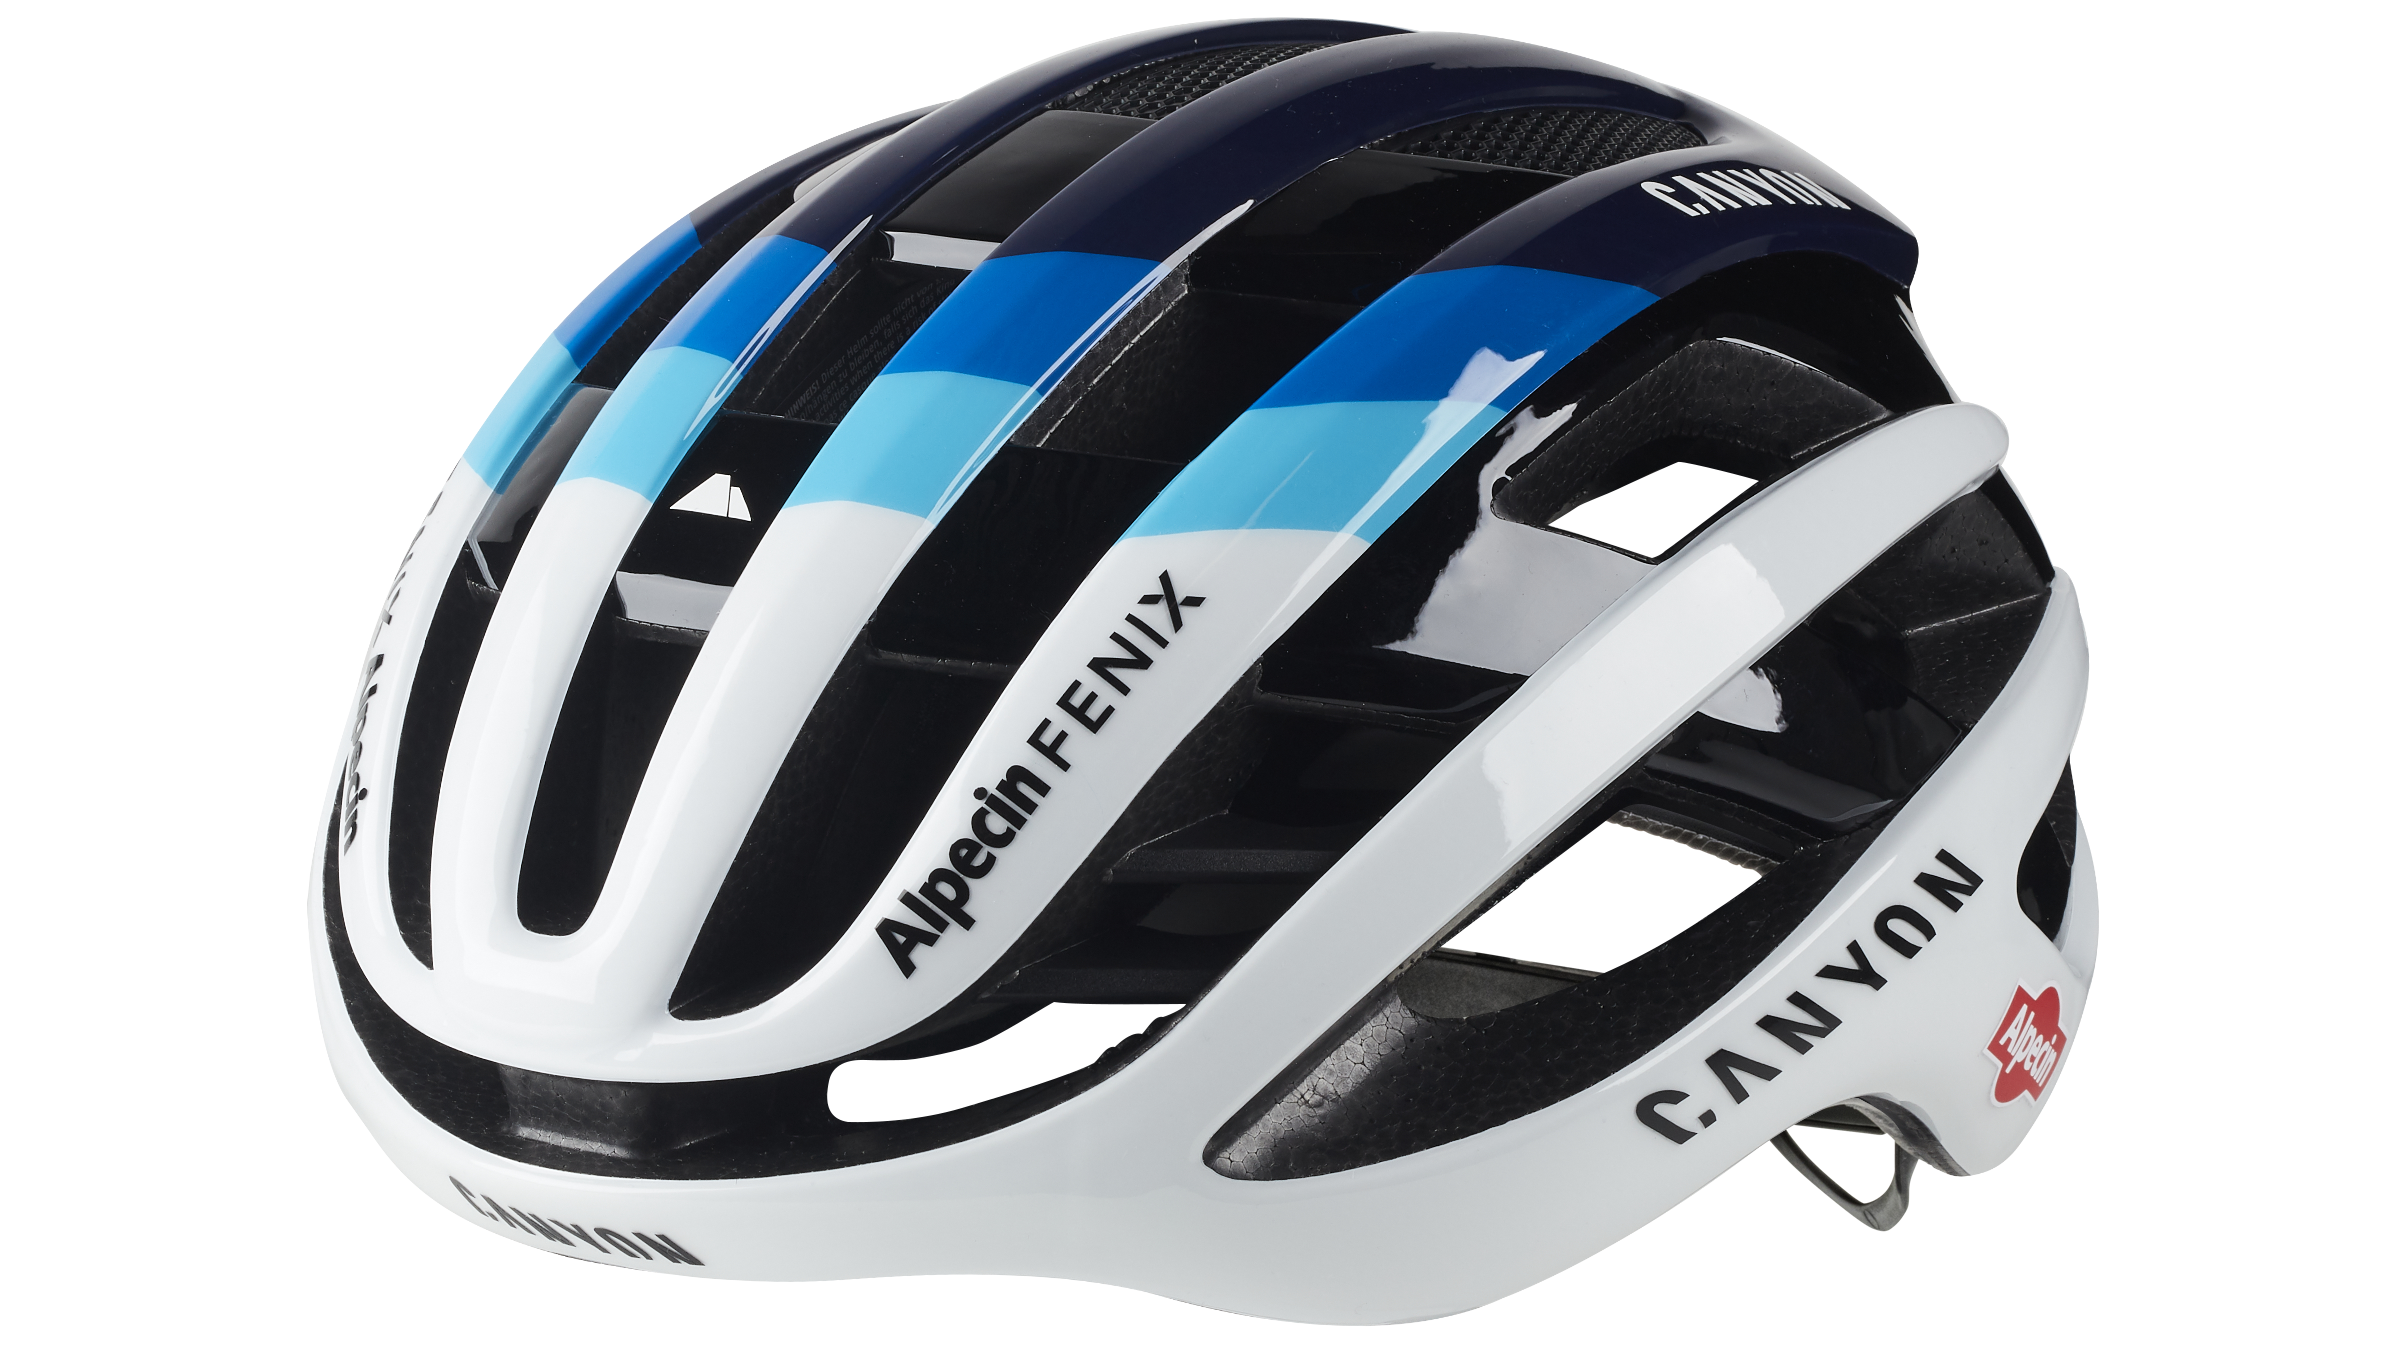 Verraad Rechthoek Ijzig Abus Alpecin-Fenix Airbreaker Road Cycling Helmet | CANYON PA